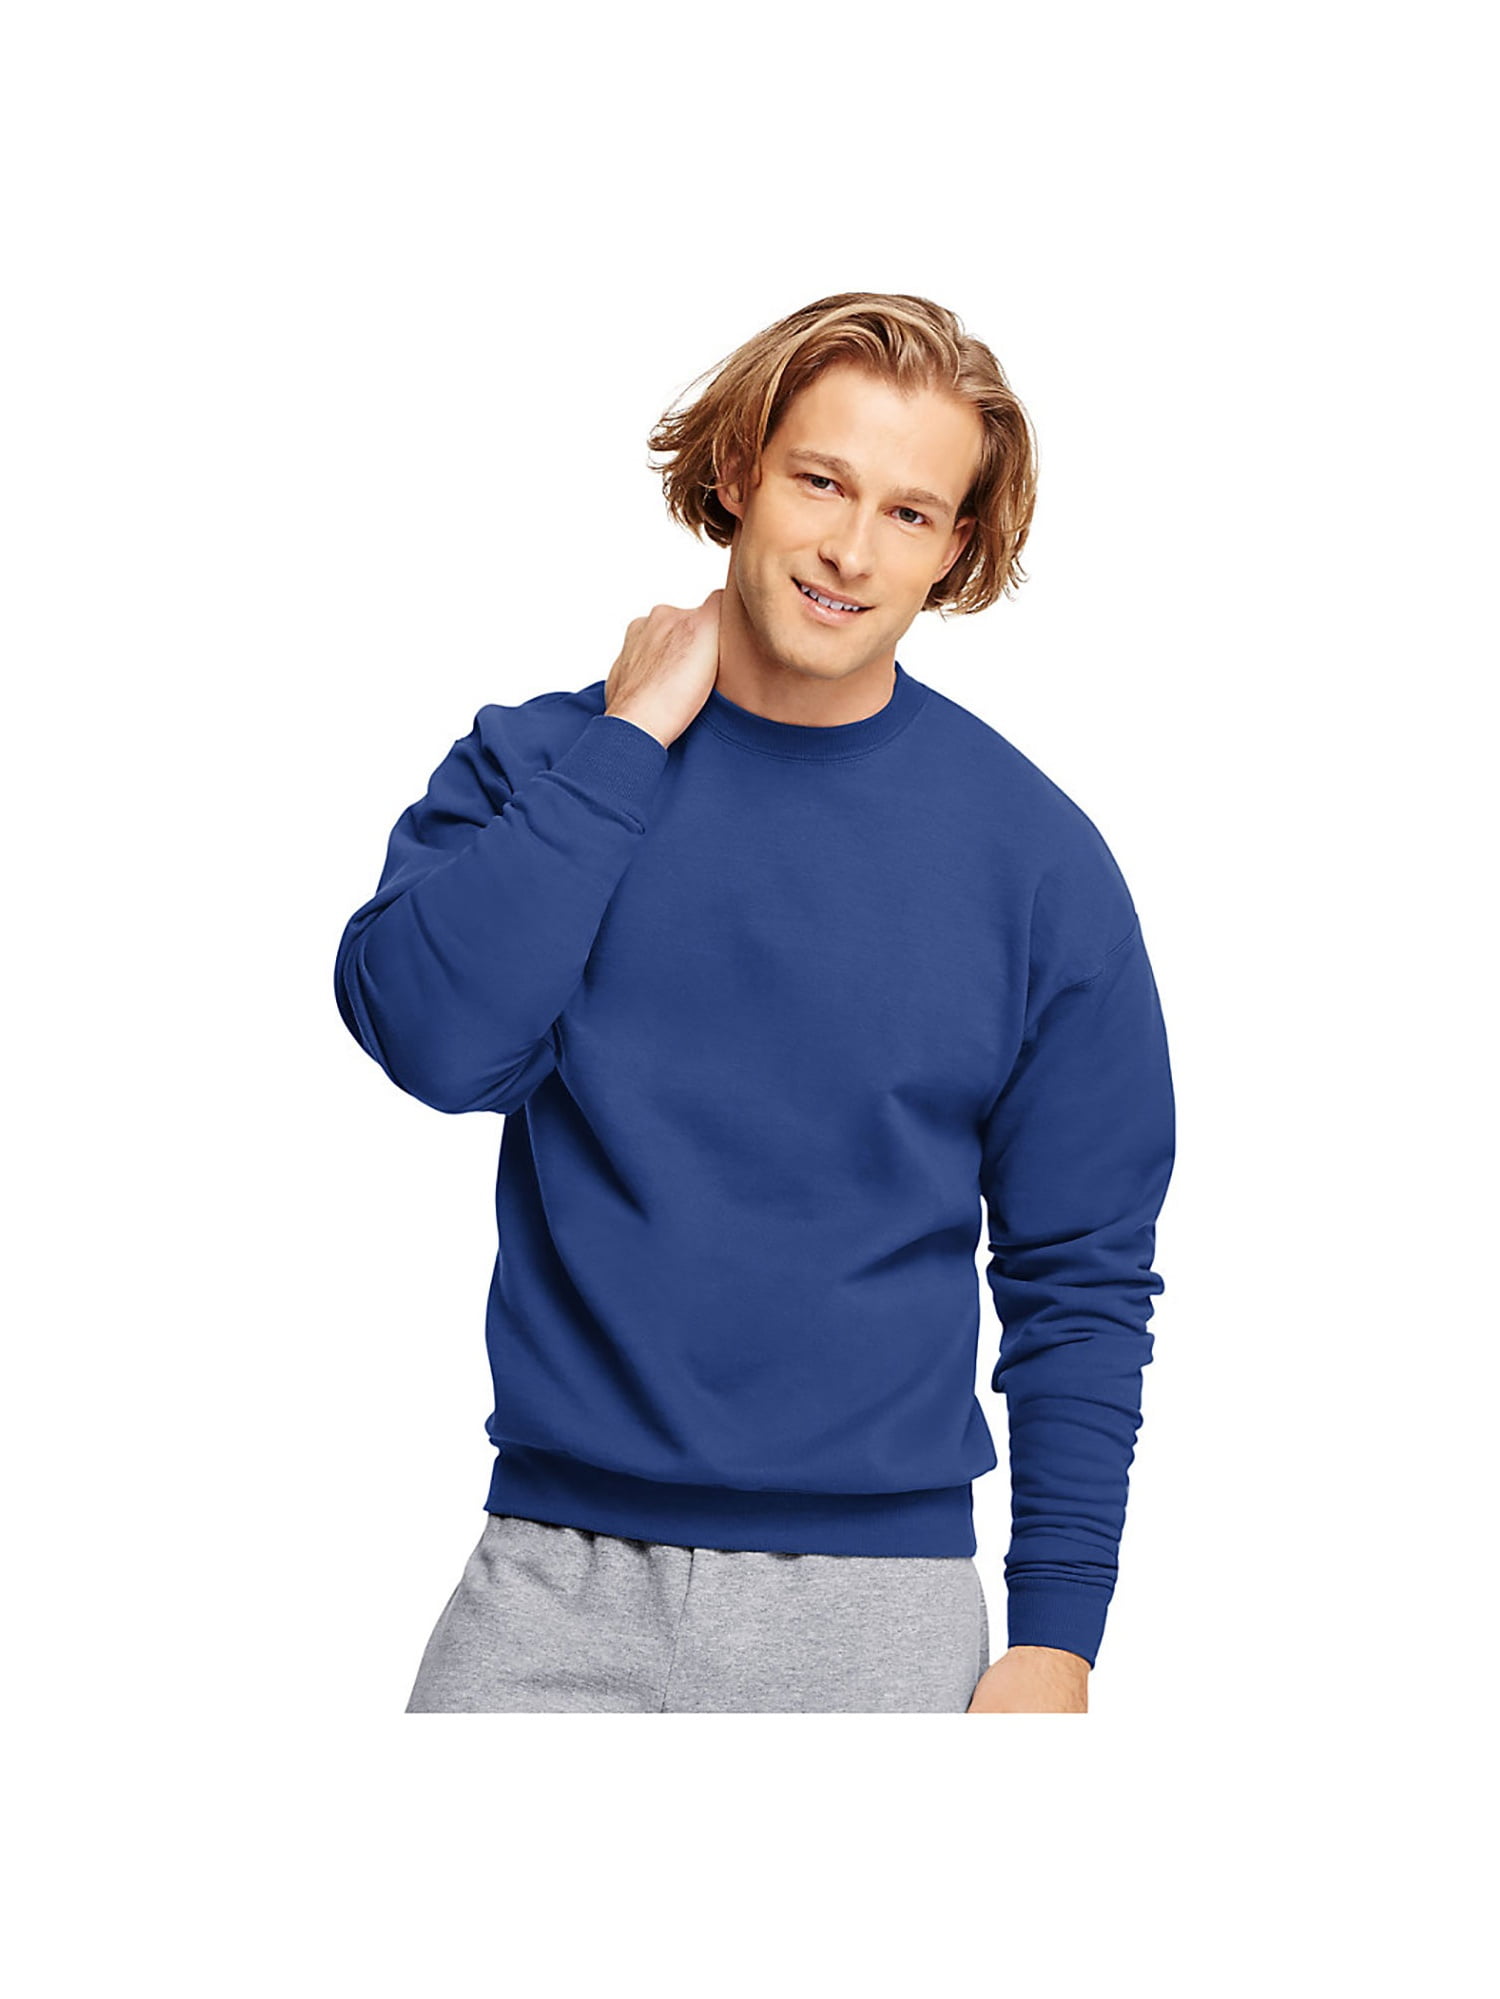 Motivational Quote Crewneck Sweater Blue Sweatshirt Make Today a Good Day Sapphire Blue Crewneck Sweatshirt Unisex